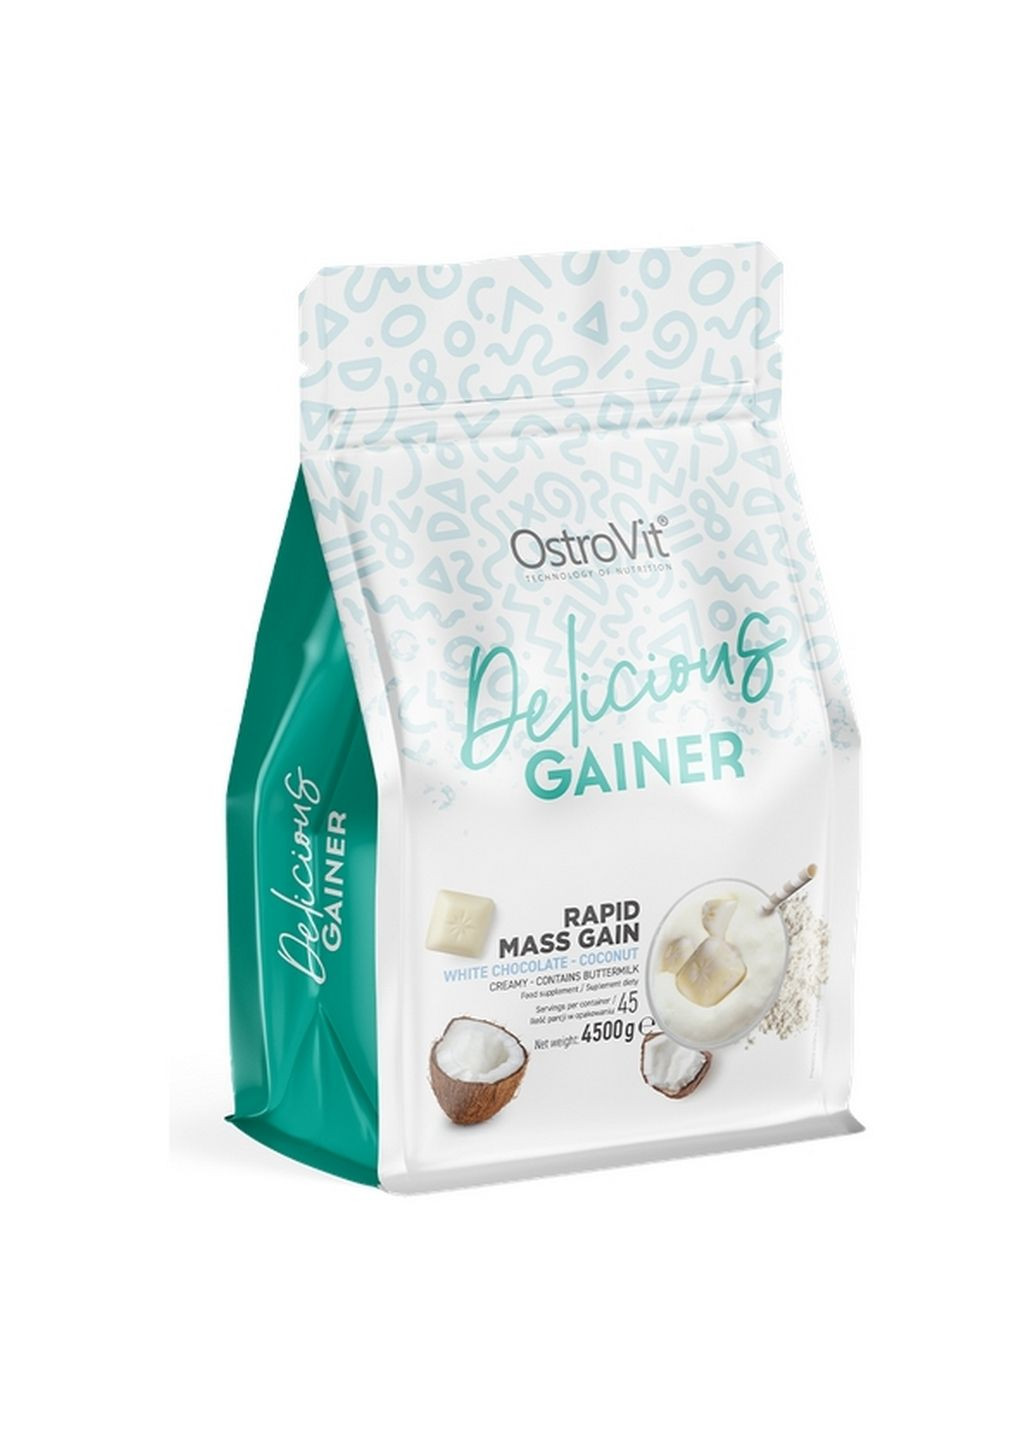 Гейнер Delicious Gainer, 4.5 кг Белый шоколад-кокос Ostrovit (293420836)